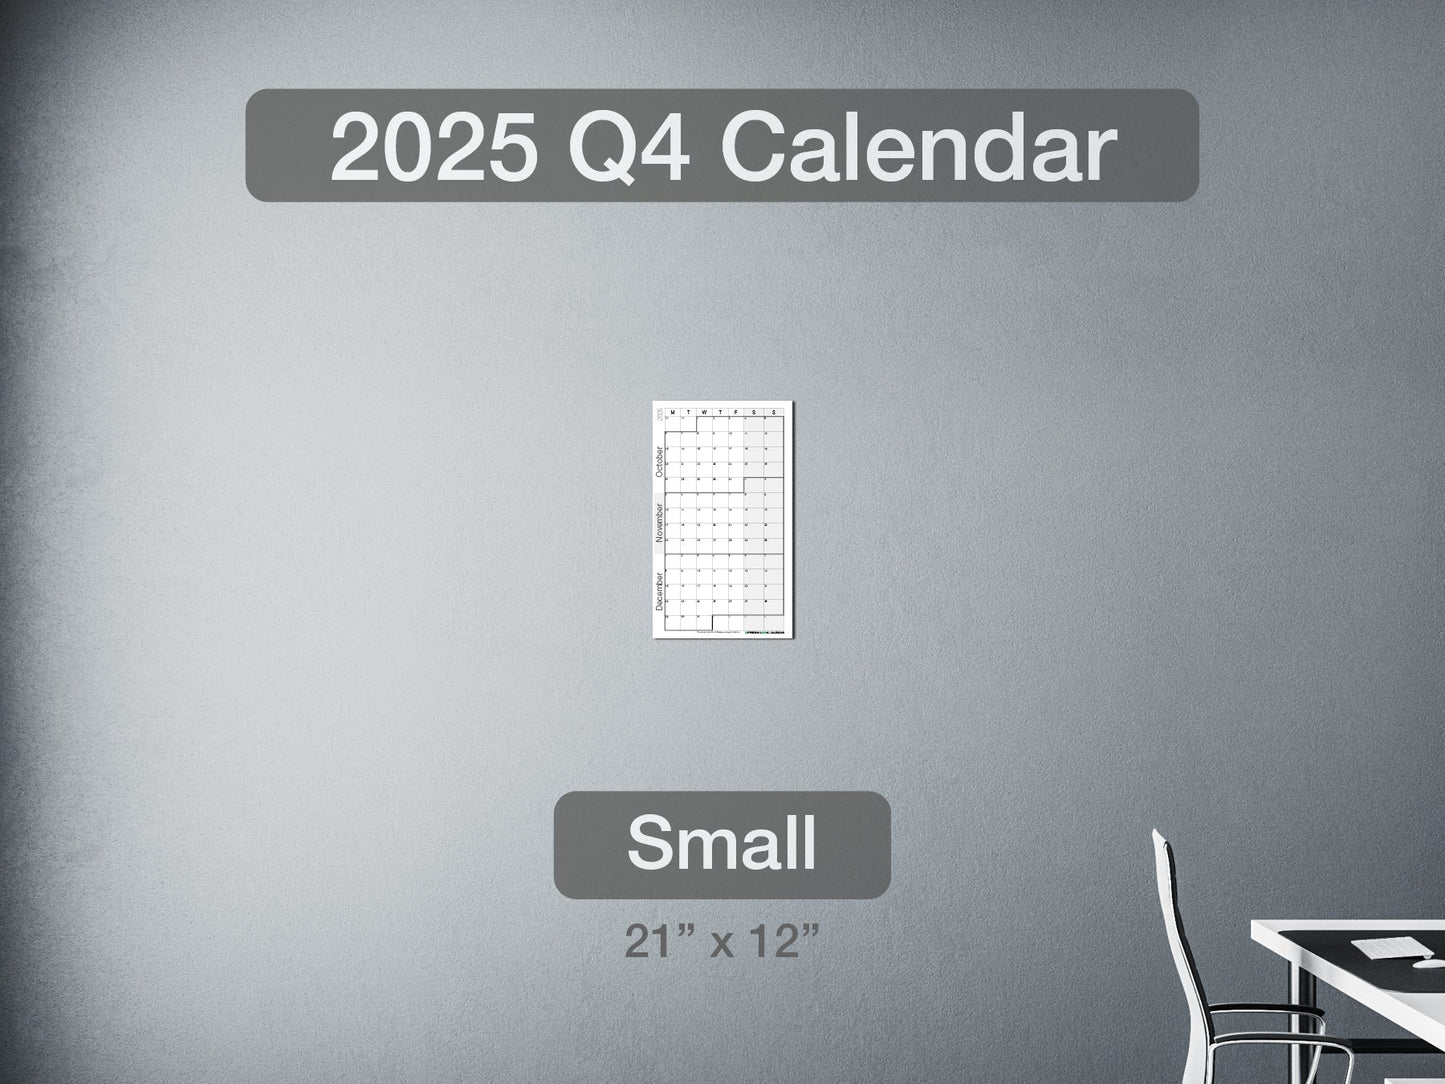 2025 Q4 Calendar Small